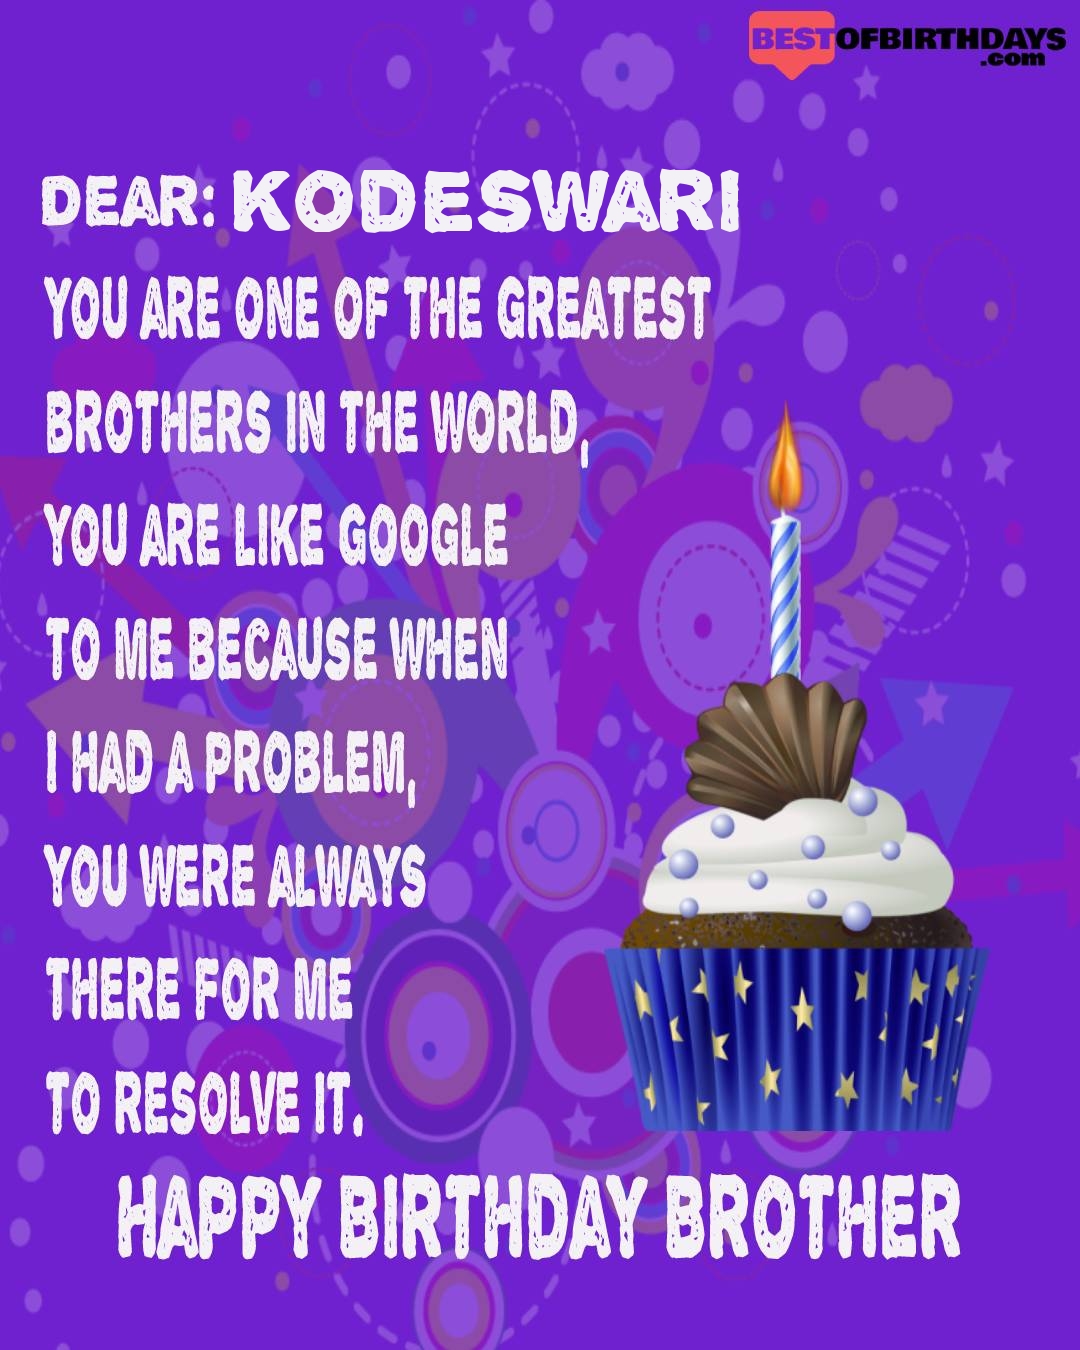 Happy birthday kodeswari bhai brother bro